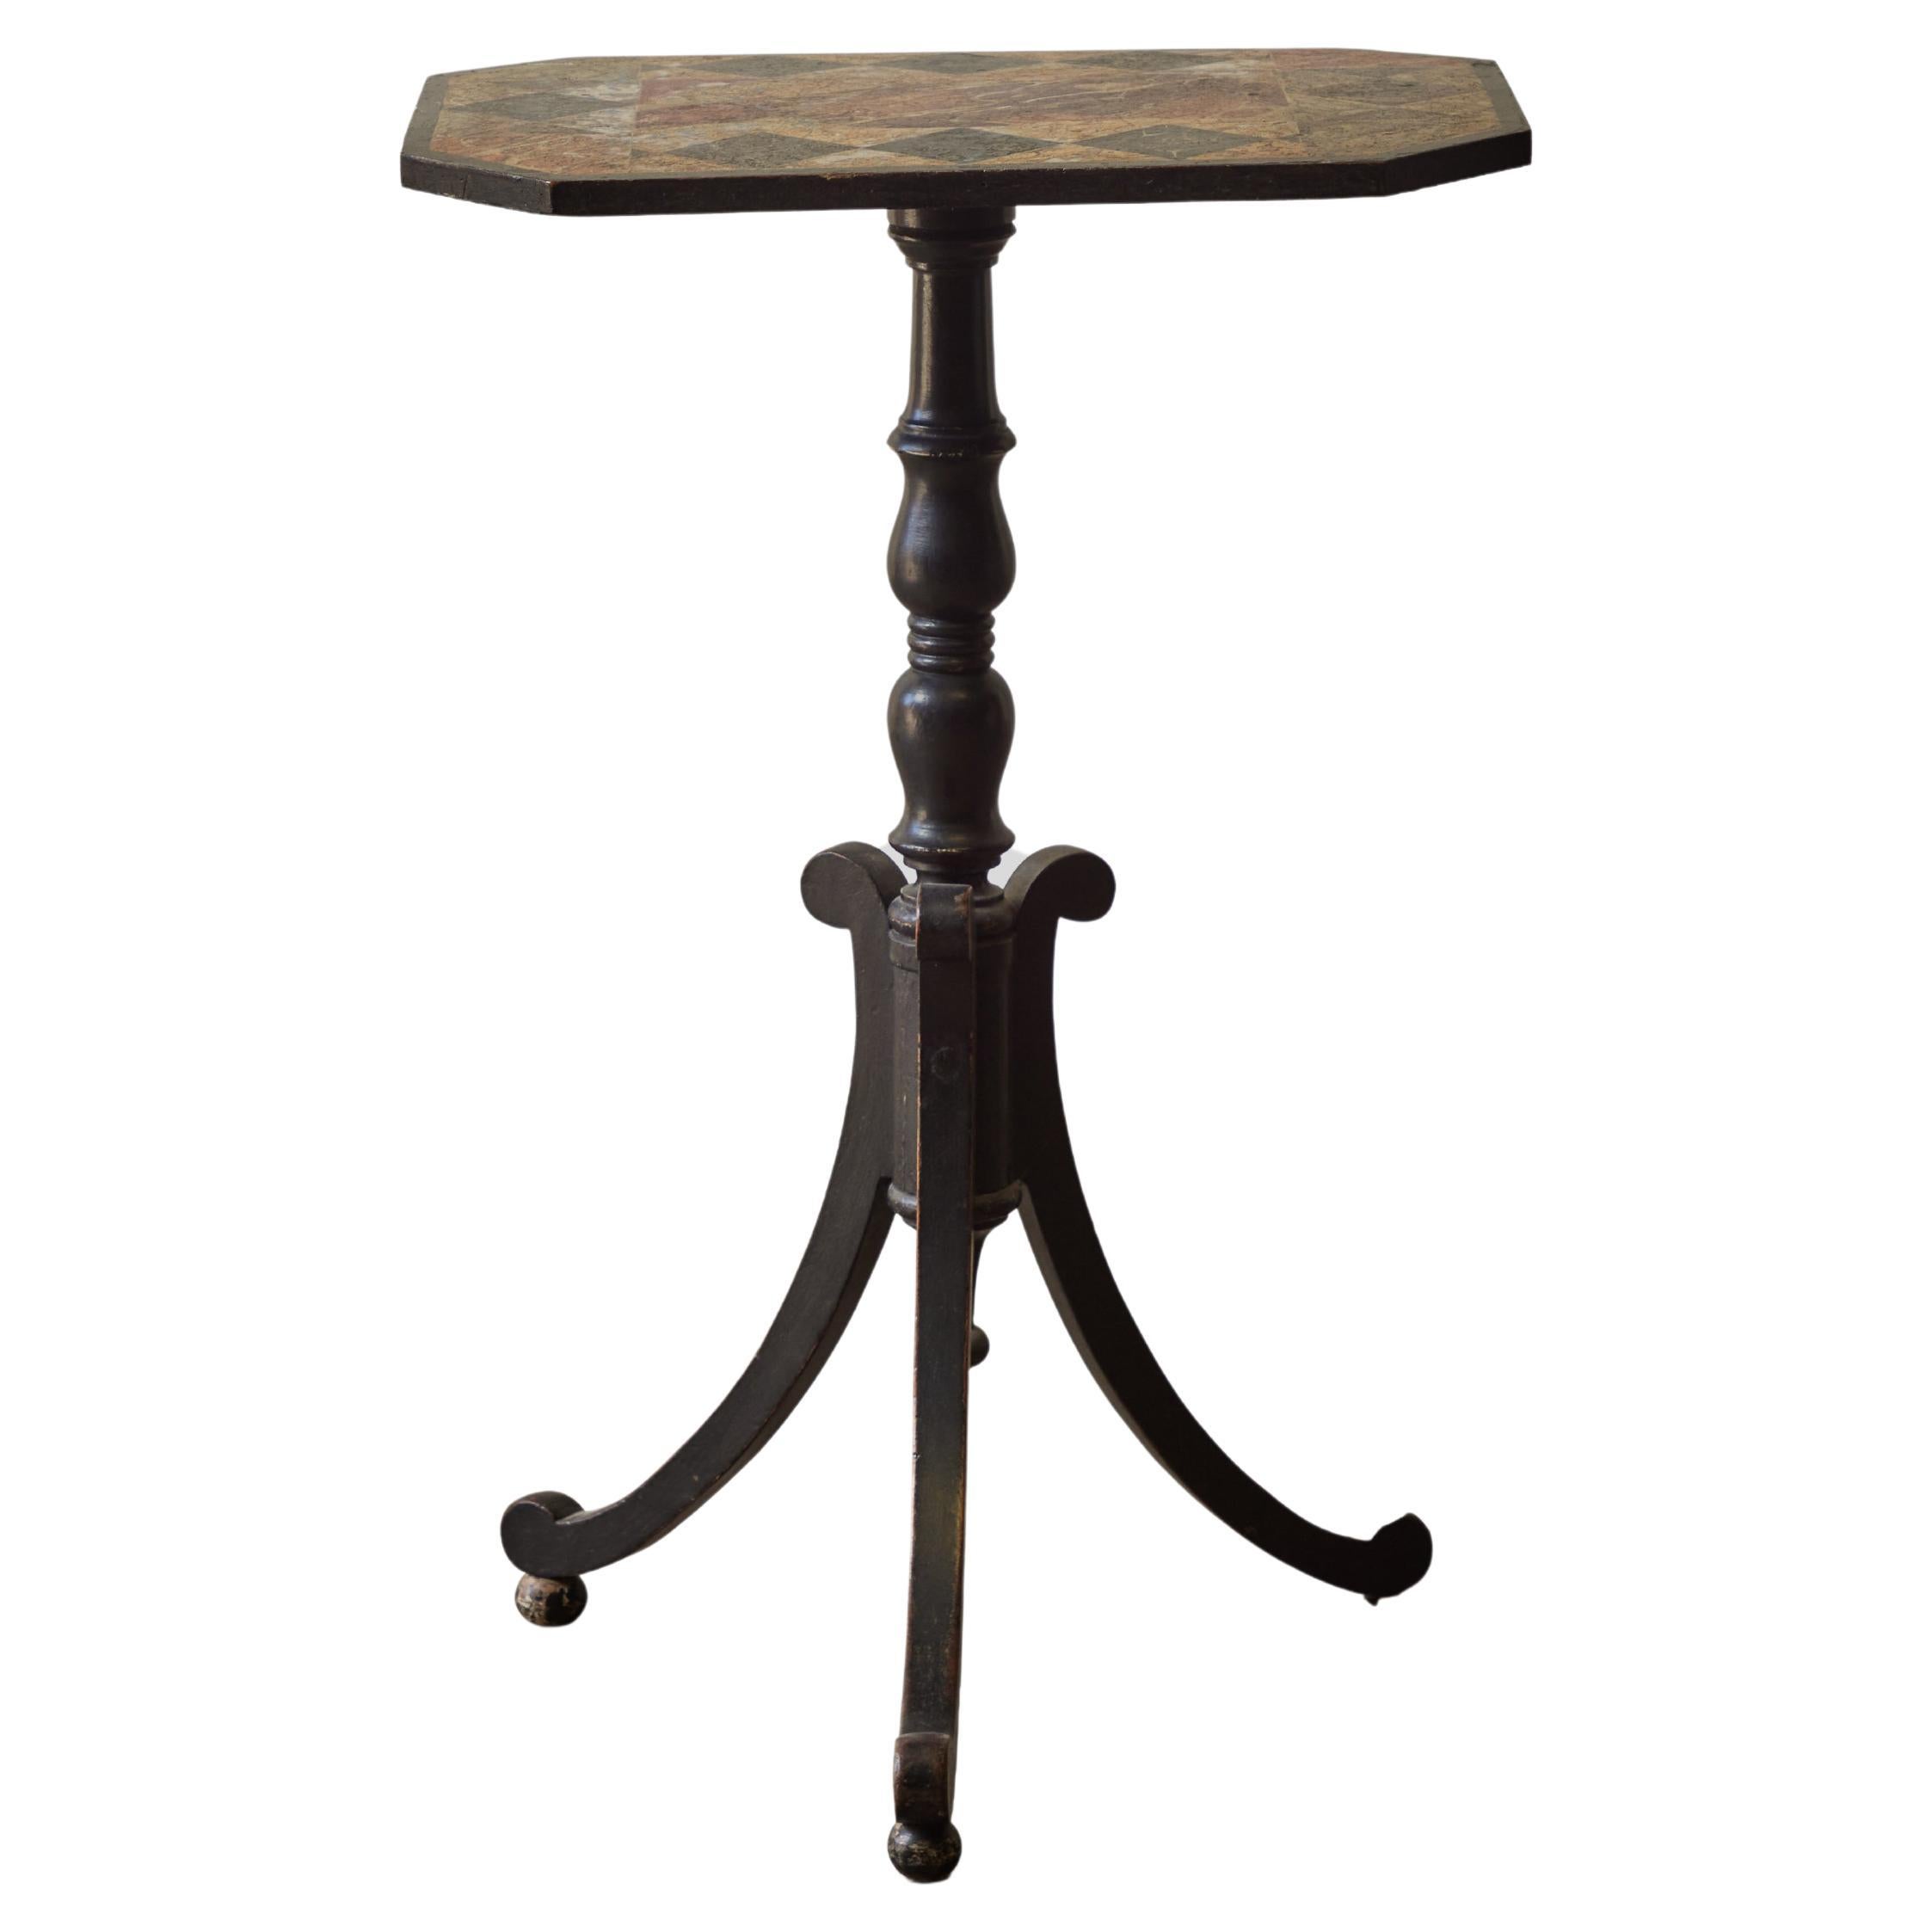 English Regency Painted Trompe-l'Oeil Specimen Table For Sale